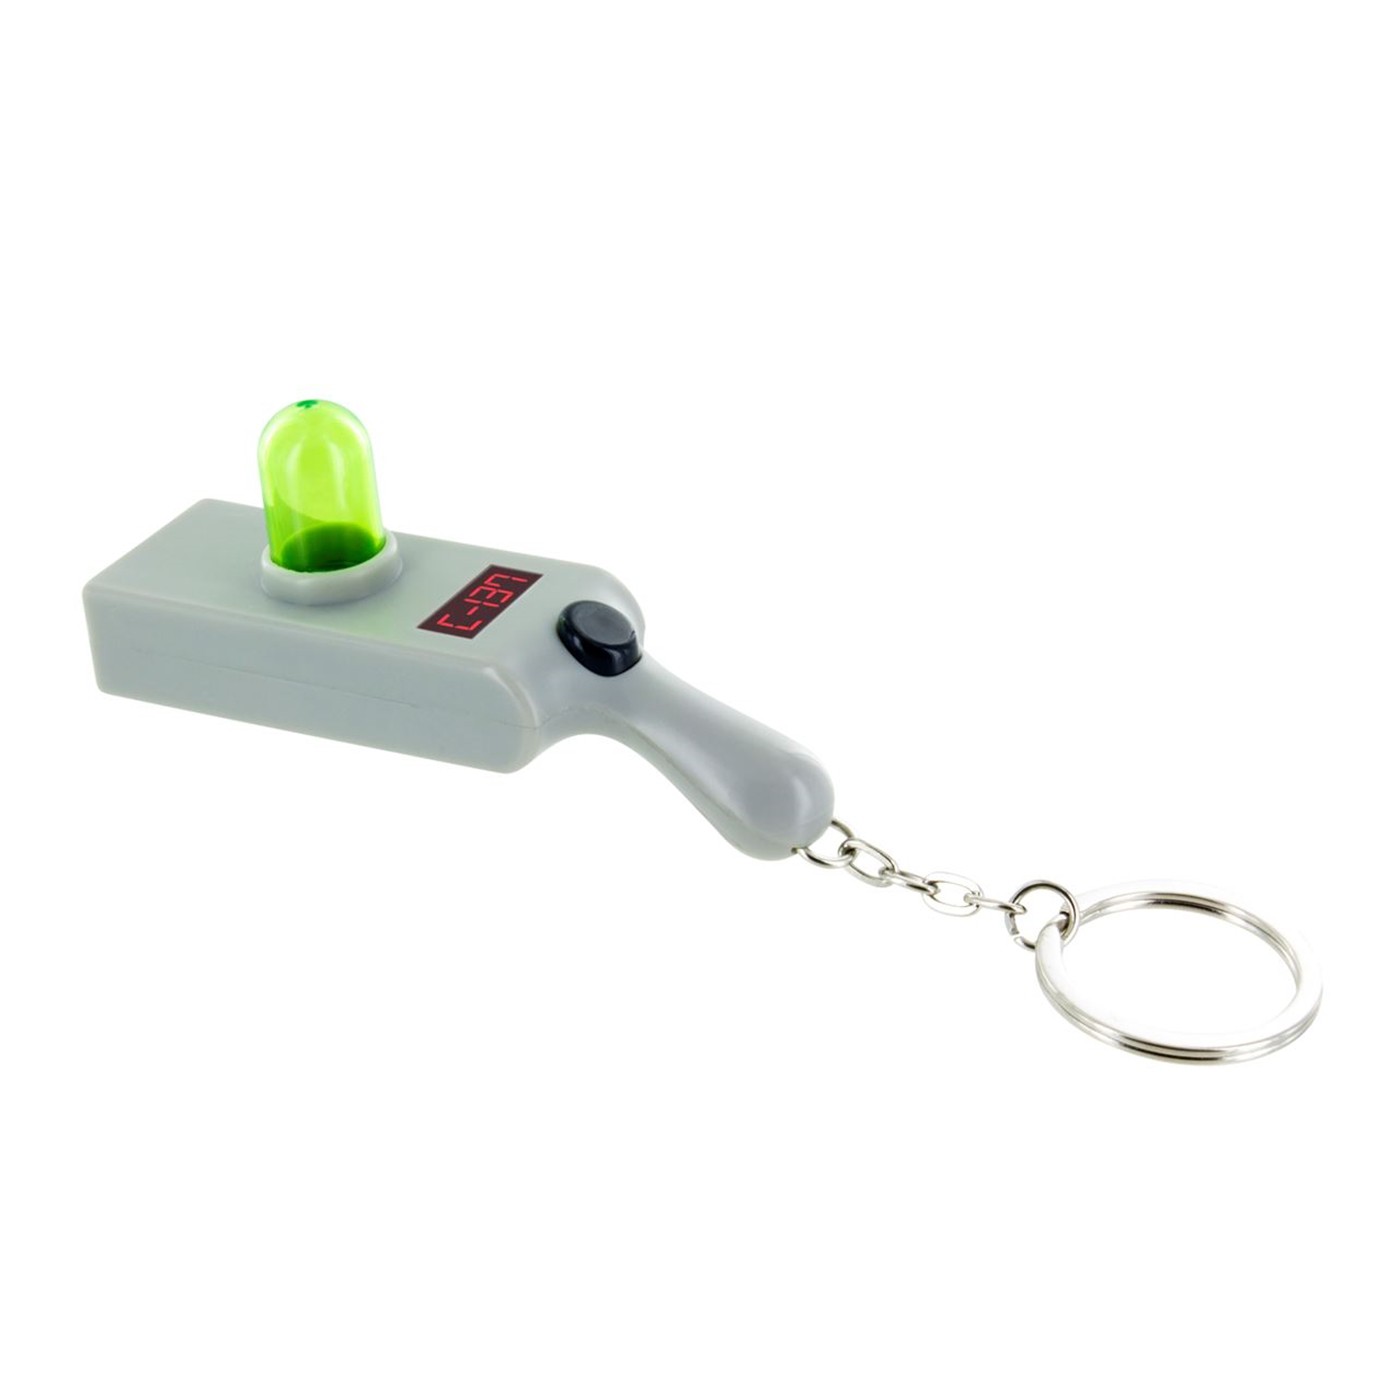 Rick and Morty Portal Gun Keychain